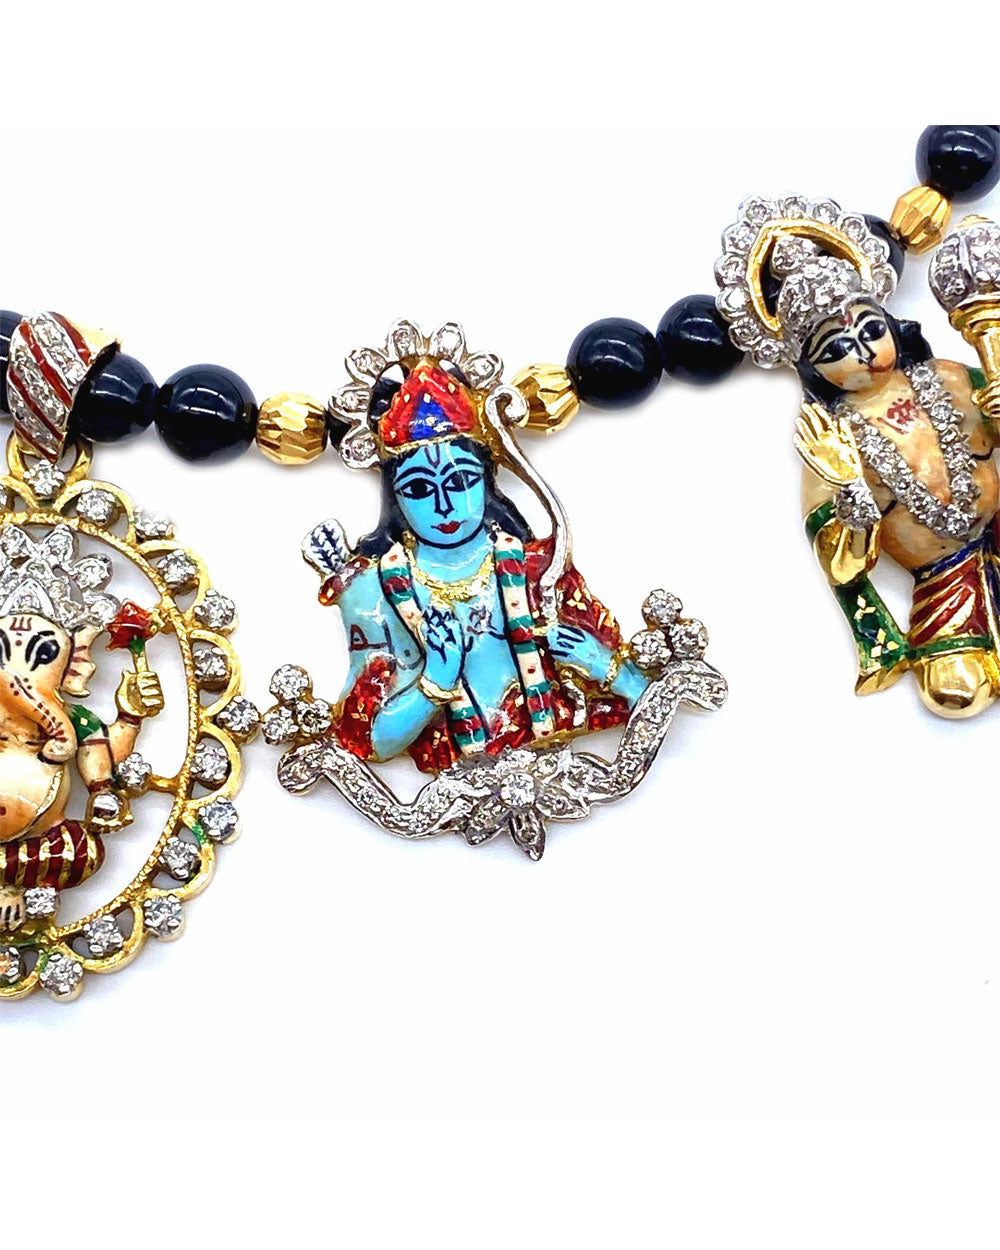 Divinity Five Gods Necklace